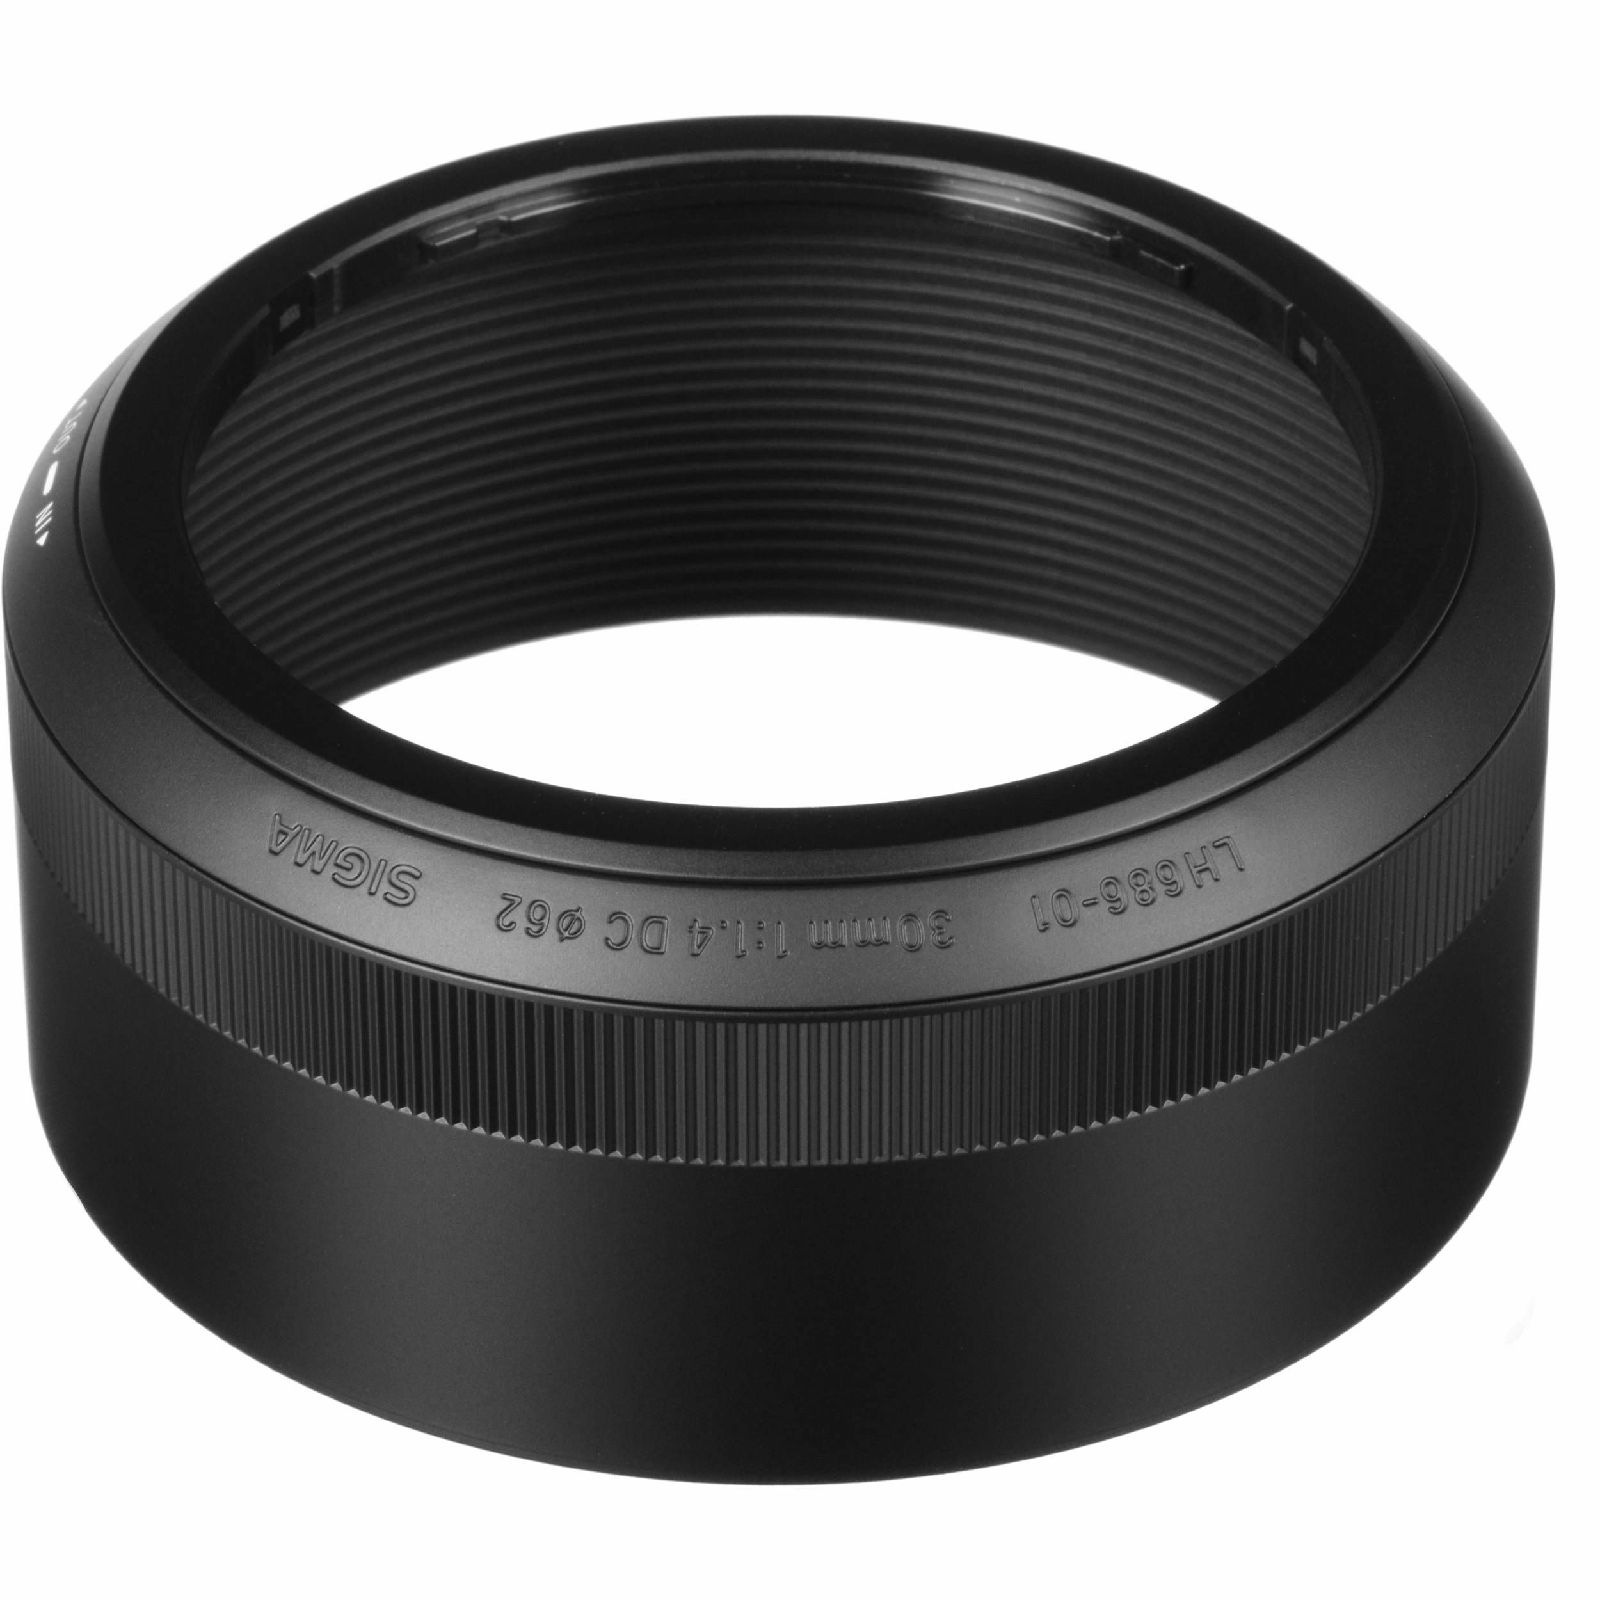 Sigma 30mm f/1.4 DC HSM ART objektiv za Canon EF-S